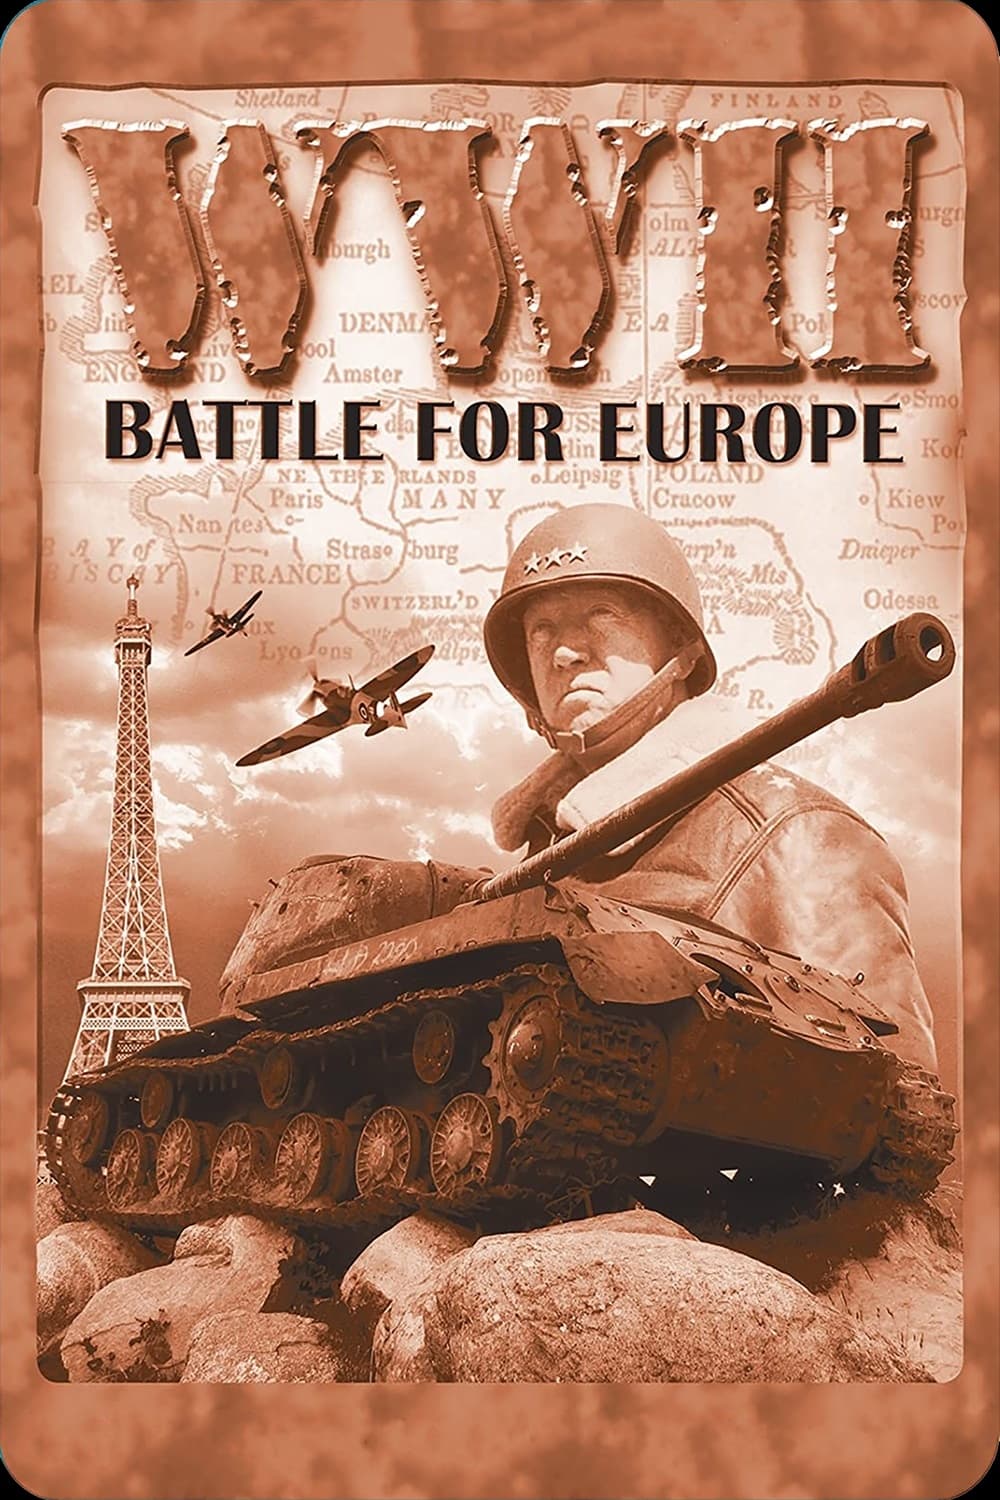 WW2 - Battles for Europe